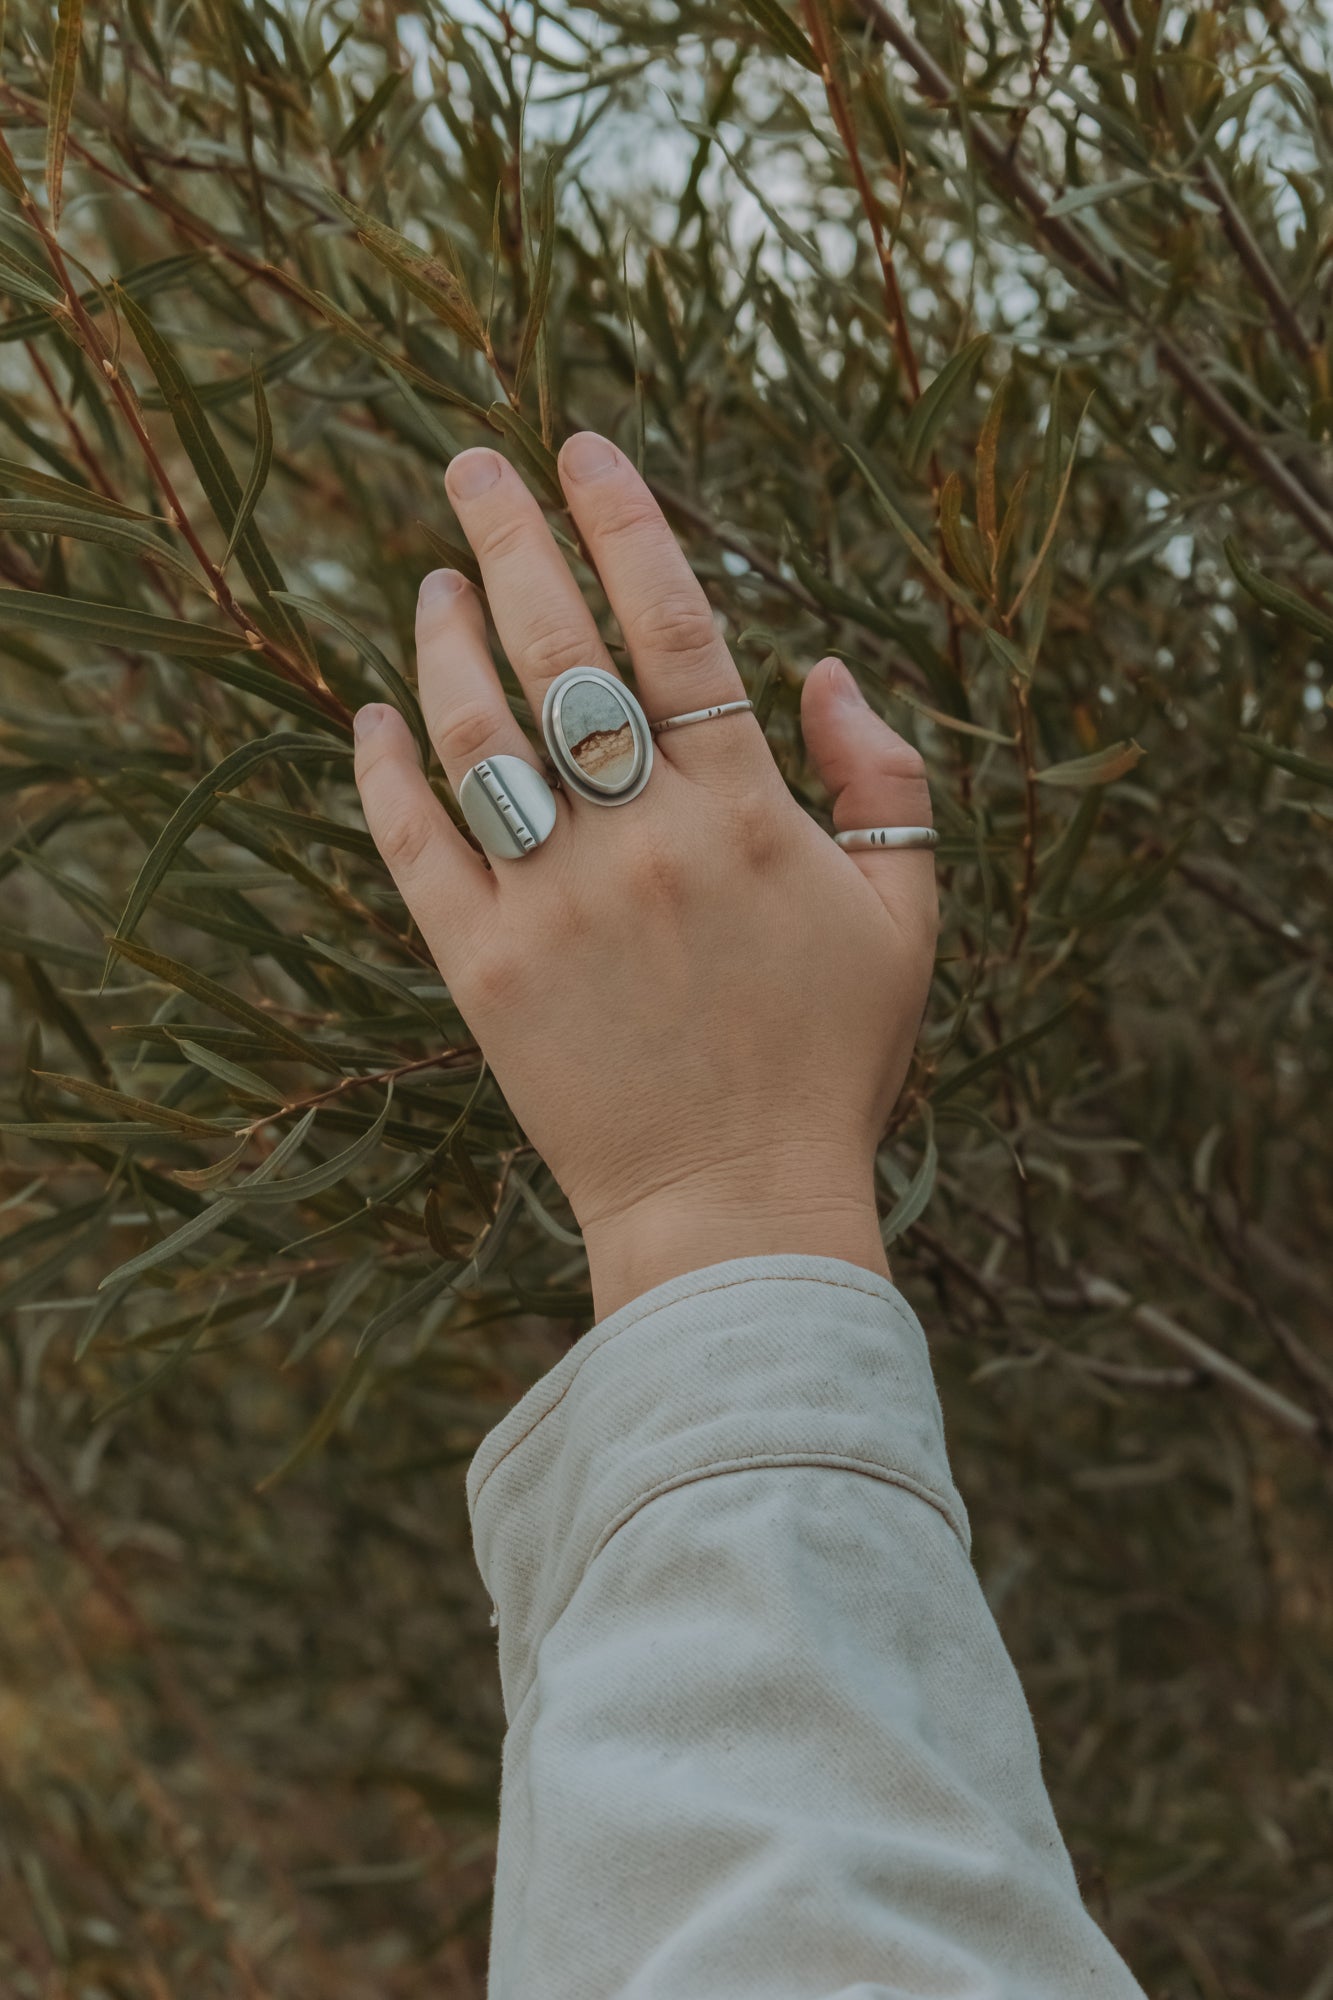 Desert Woman Statement Ring B - Size 9.25 - Third Hand Silversmith LLC handmade jewelry, Bozeman, Montana